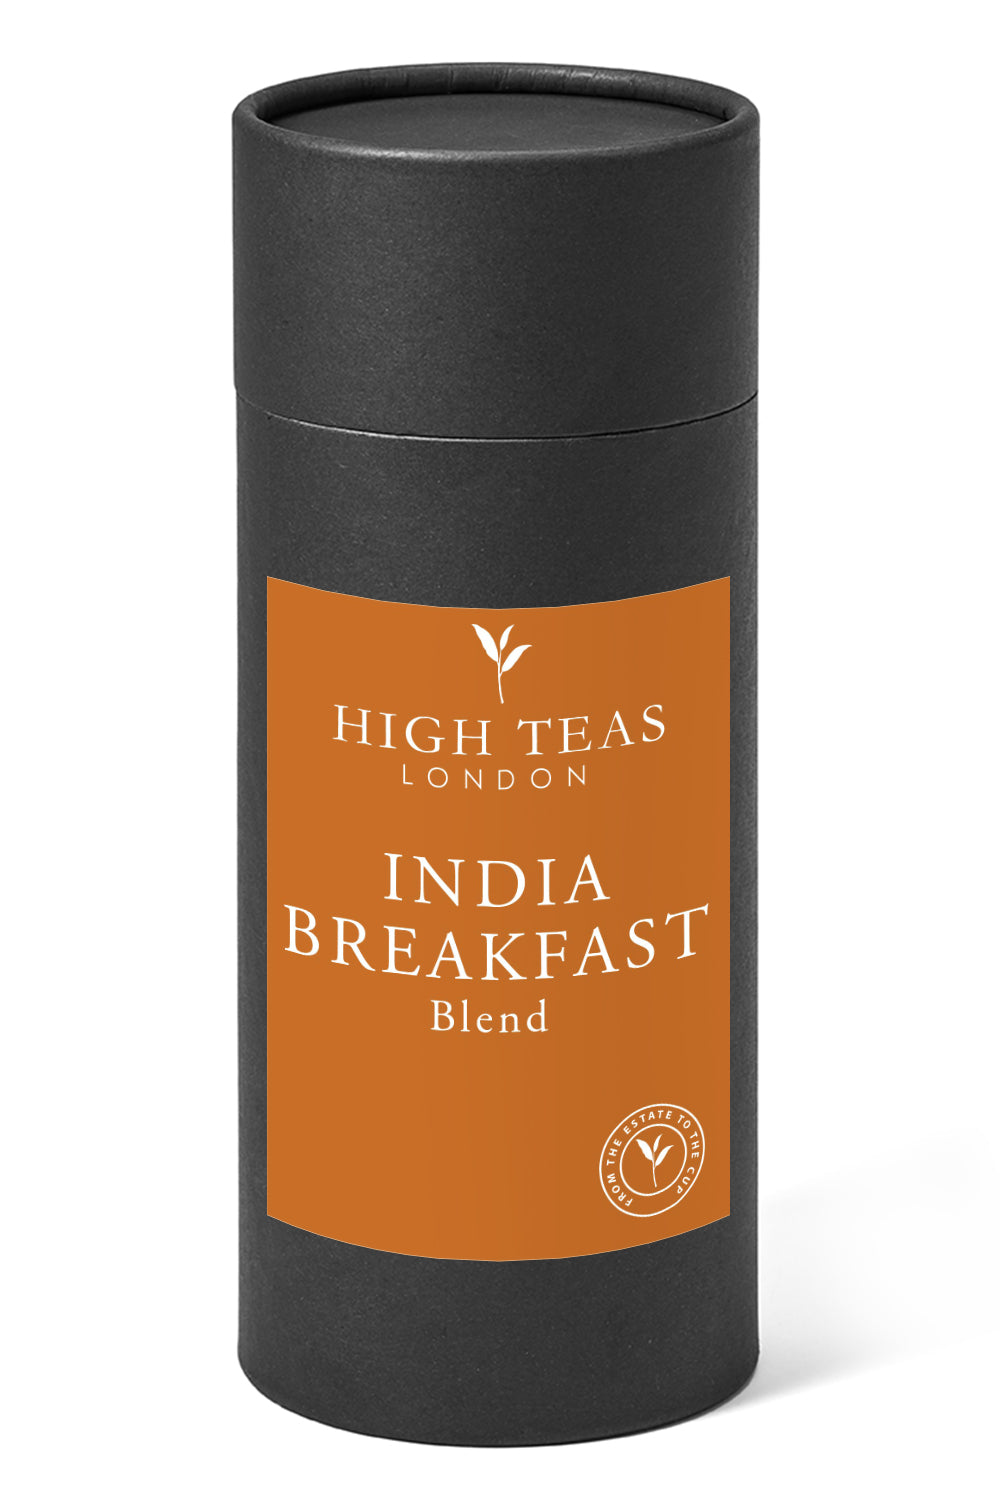 India Breakfast Blend-150g gift-Loose Leaf Tea-High Teas